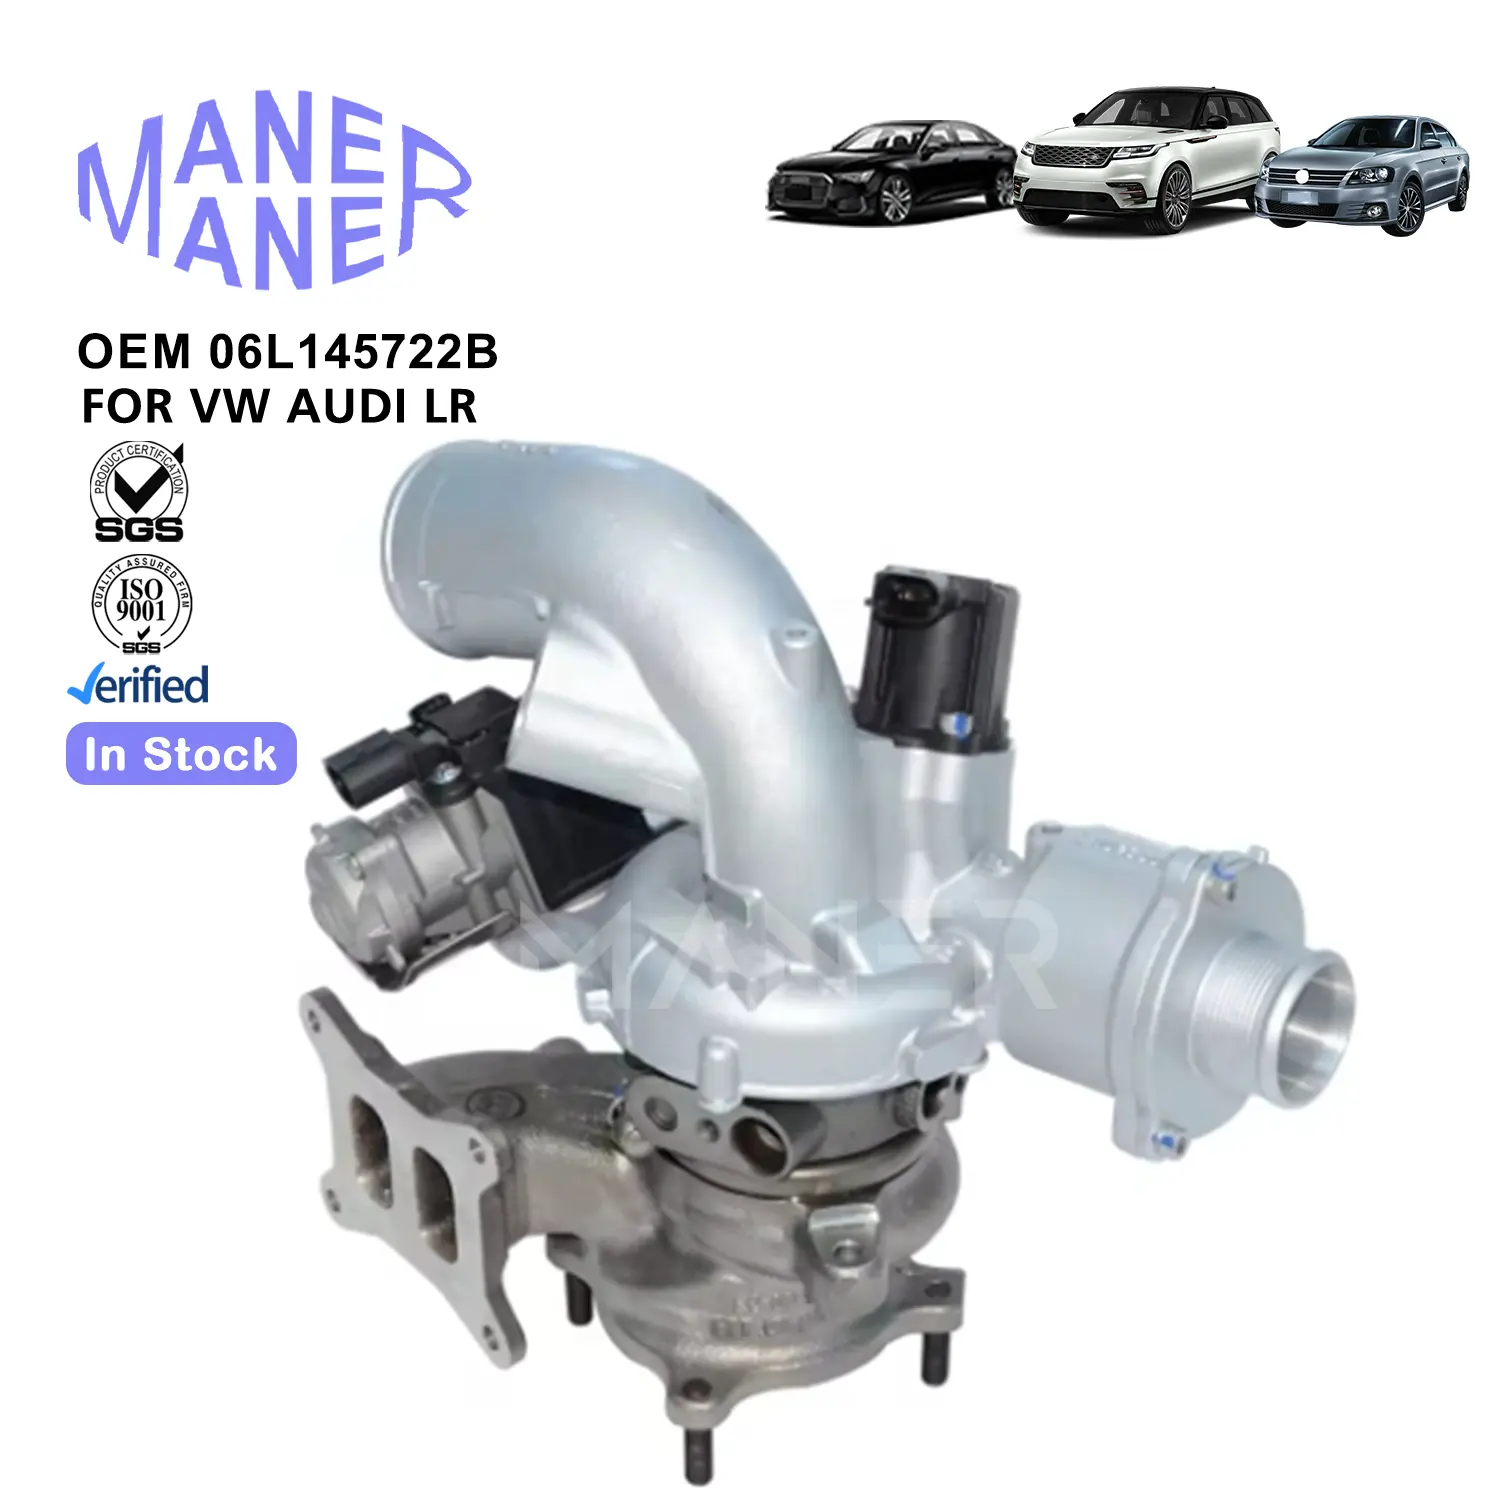 Maner Auto Motor Systemen 06l145722b 06l145874c 06l145874b Fabricage Goed Gemaakte Turbocompressor Voor Audi A4 A5 A6 C7 A7 Q5 2.0T